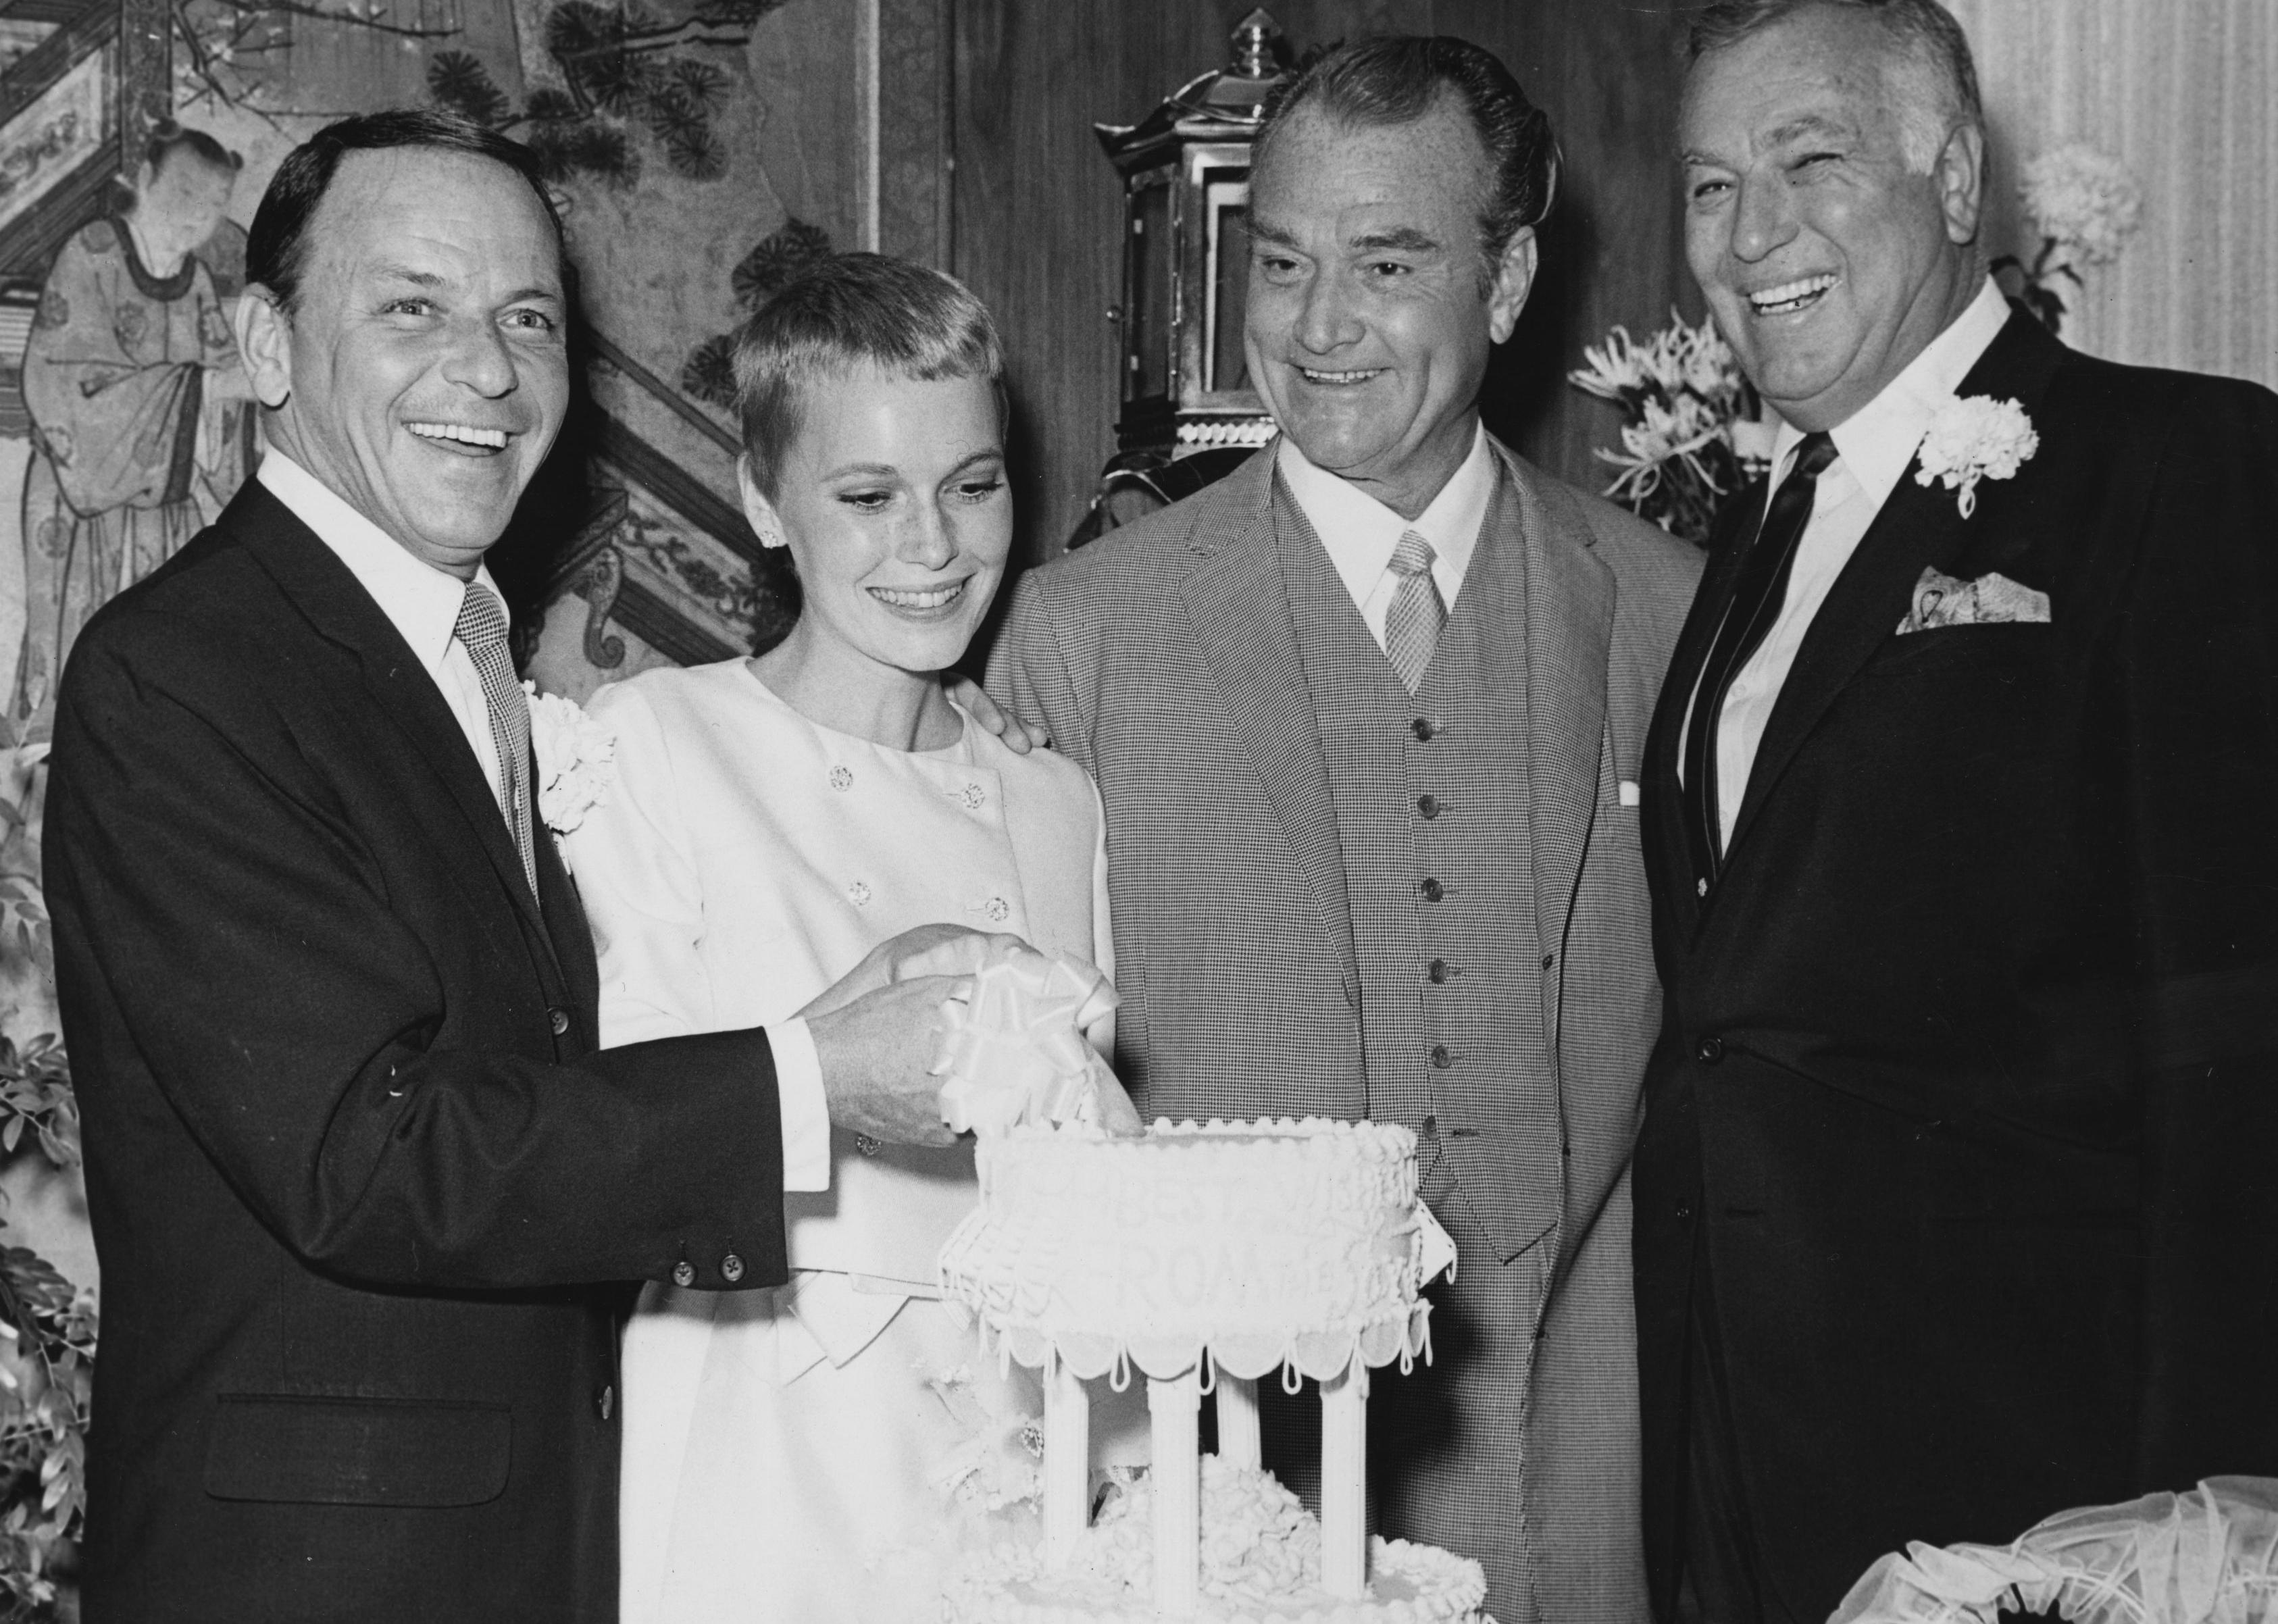 Frank Sinatra with actress Mia Farrow on their wedding day at Las Vegas with Red Skelton.